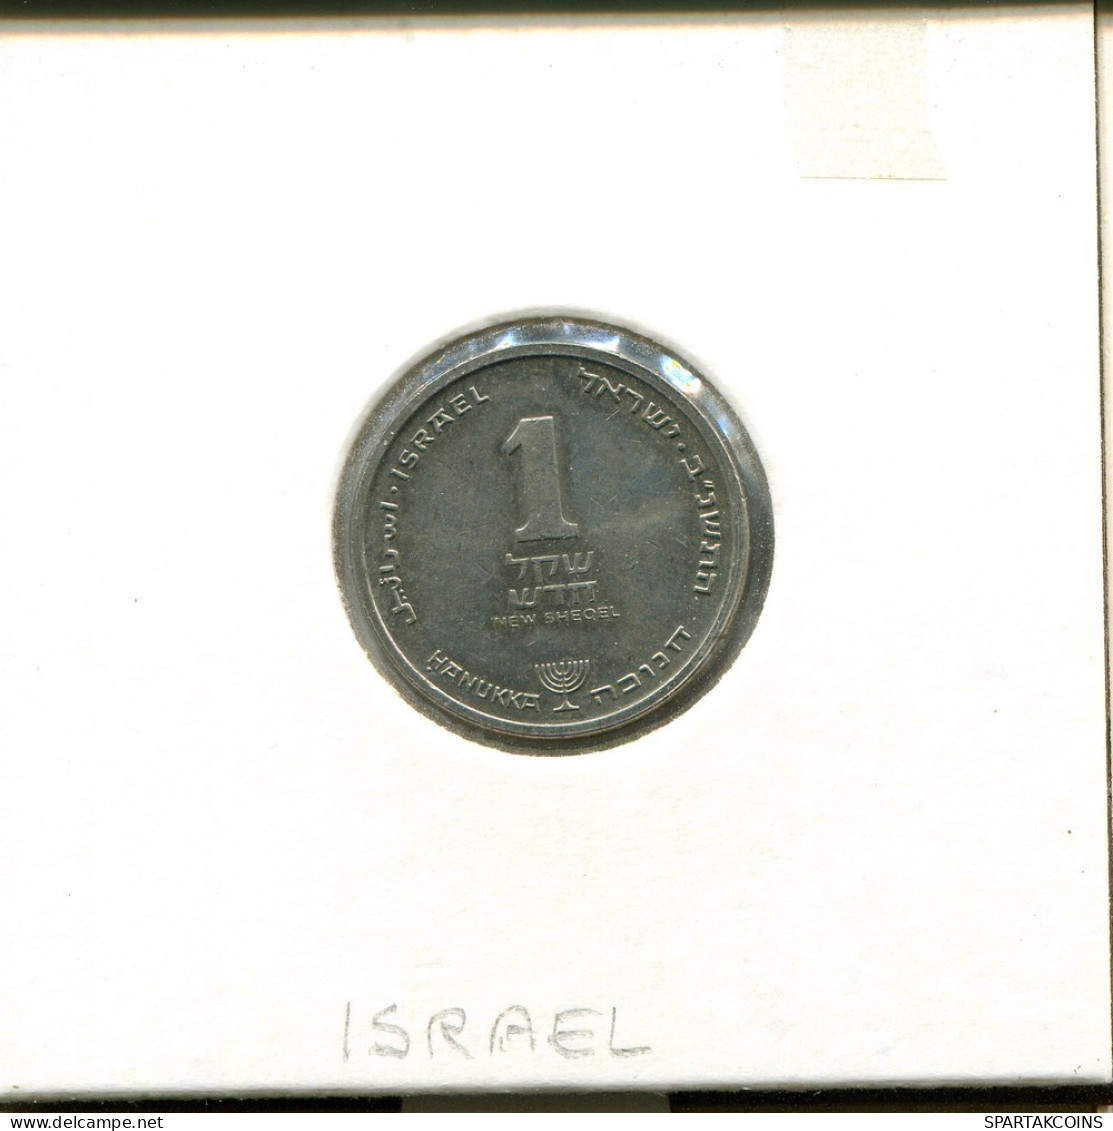 1 NEW SHEQEL 1992 ISRAEL Münze #AS037.D.A - Israel